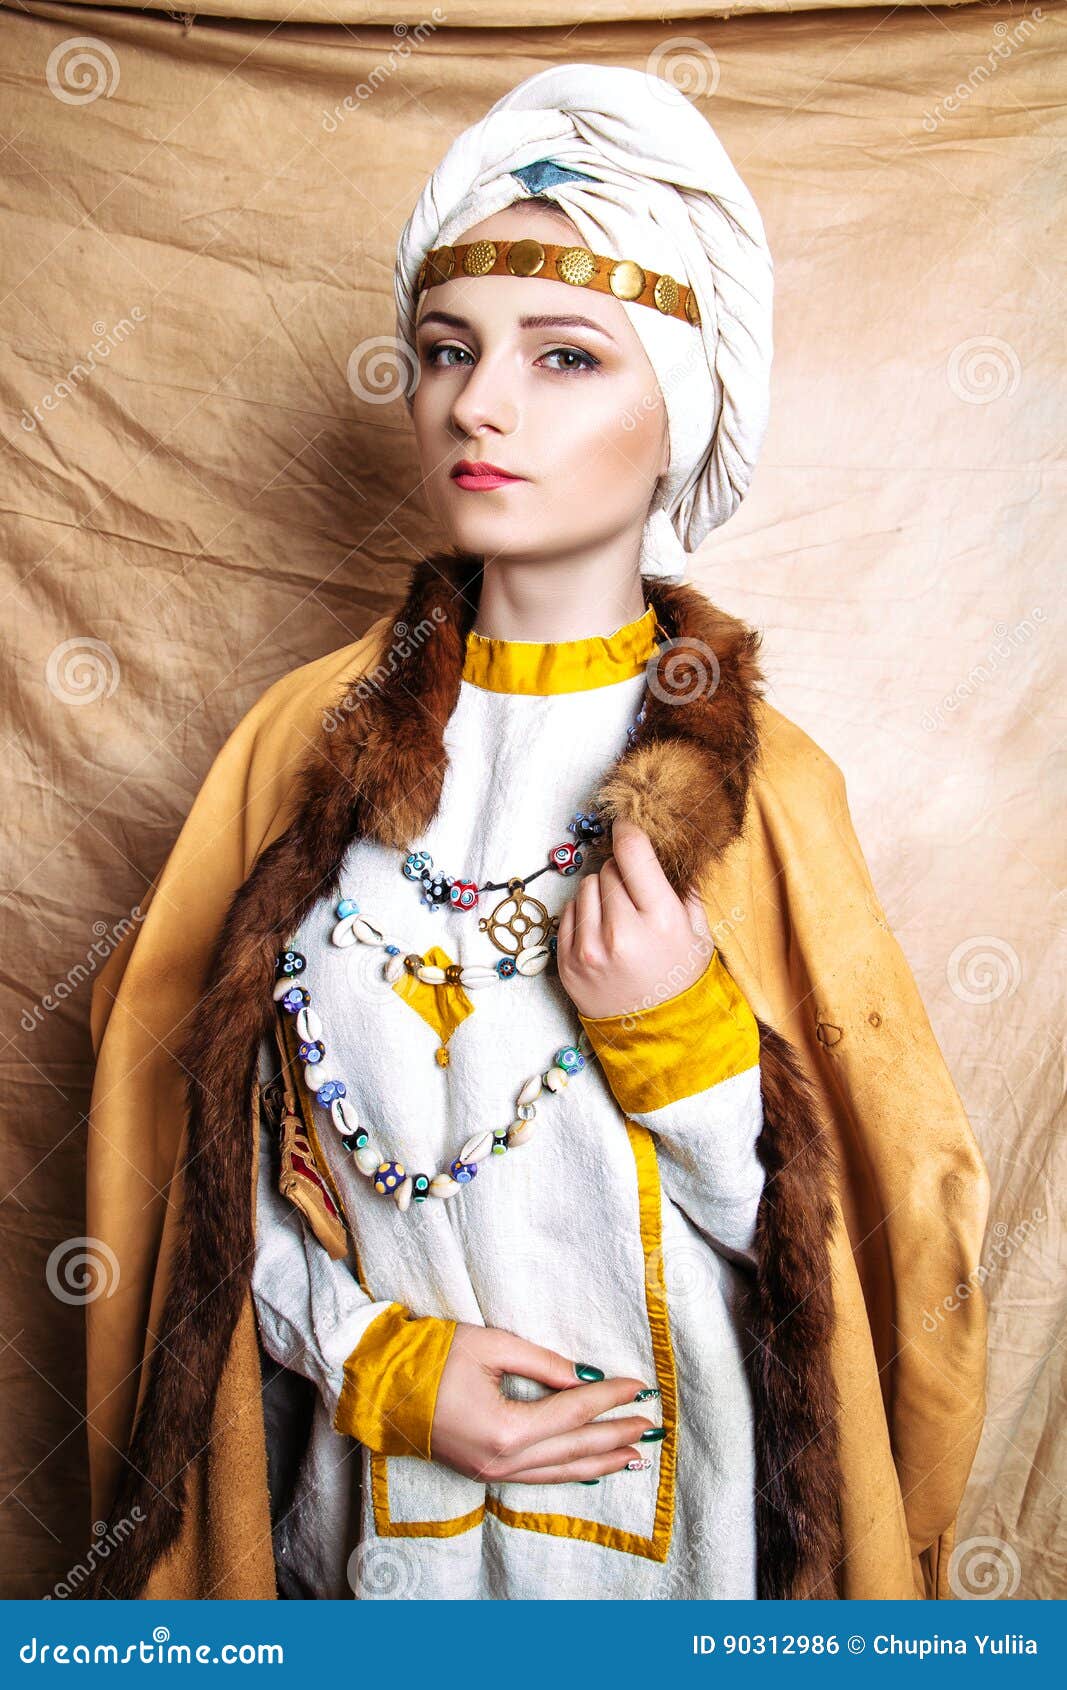 https://thumbs.dreamstime.com/z/portrait-slavic-women-past-national-vintage-clothing-woman-historical-reconstruction-studio-90312986.jpg